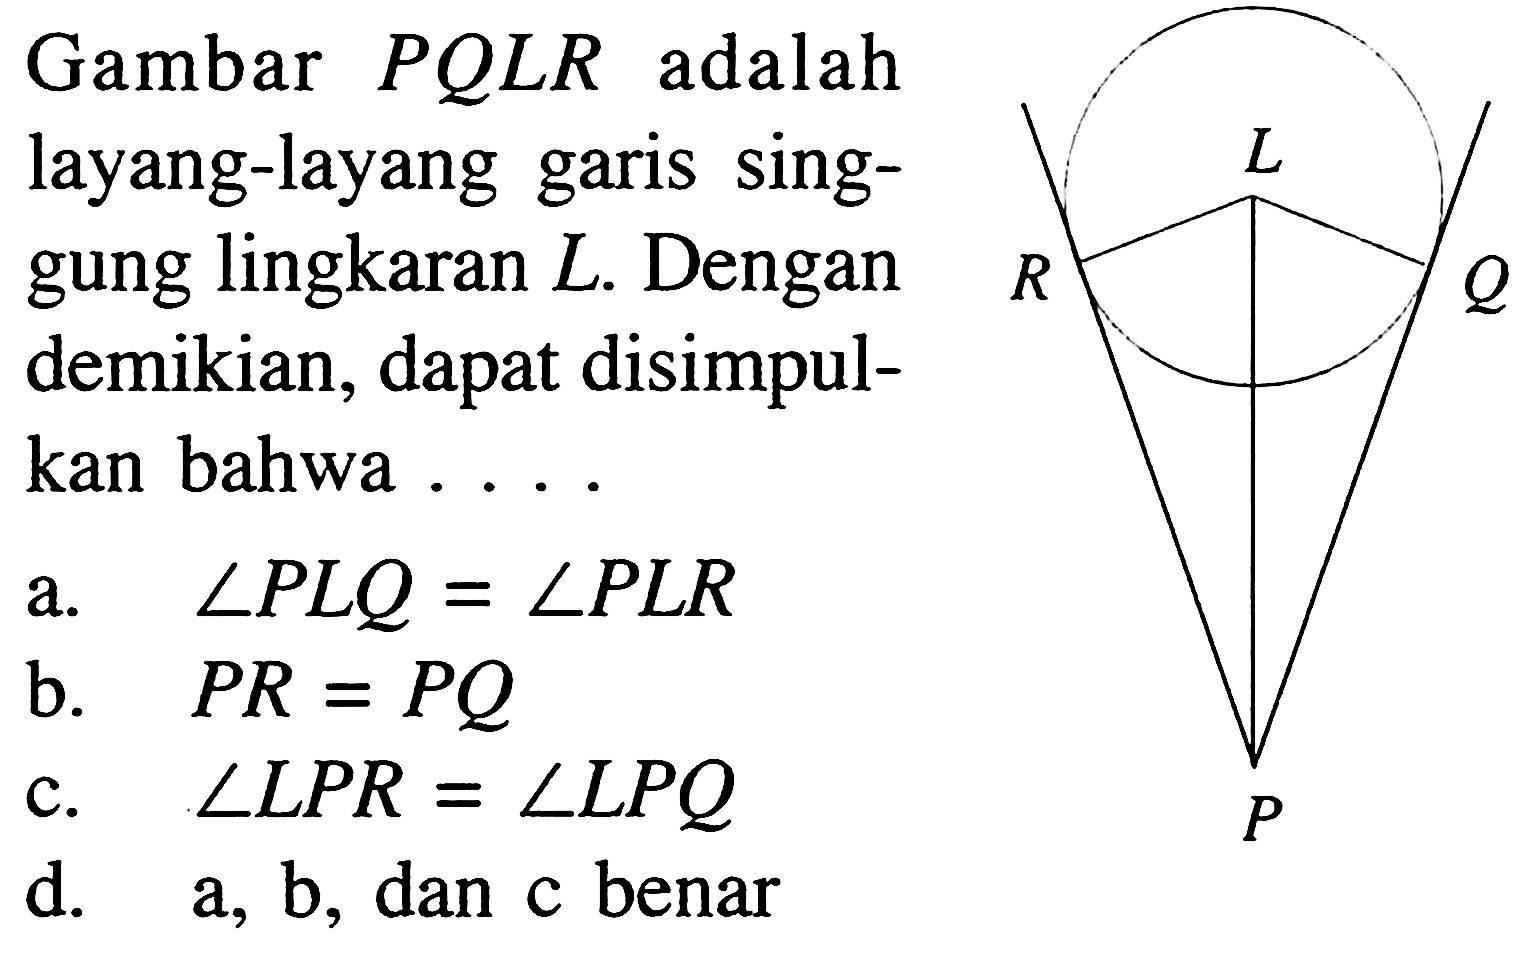 Gambar PQLR adalah layang-layang garis singgung lingkaran L. Dengan demikian, dapat disimpulkan bahwa .... R L Q P 
a. sudut PLQ = sudut PLR b. PR = PQ c. sudut LPR = sudut LPQ d. a, b , dan c benar